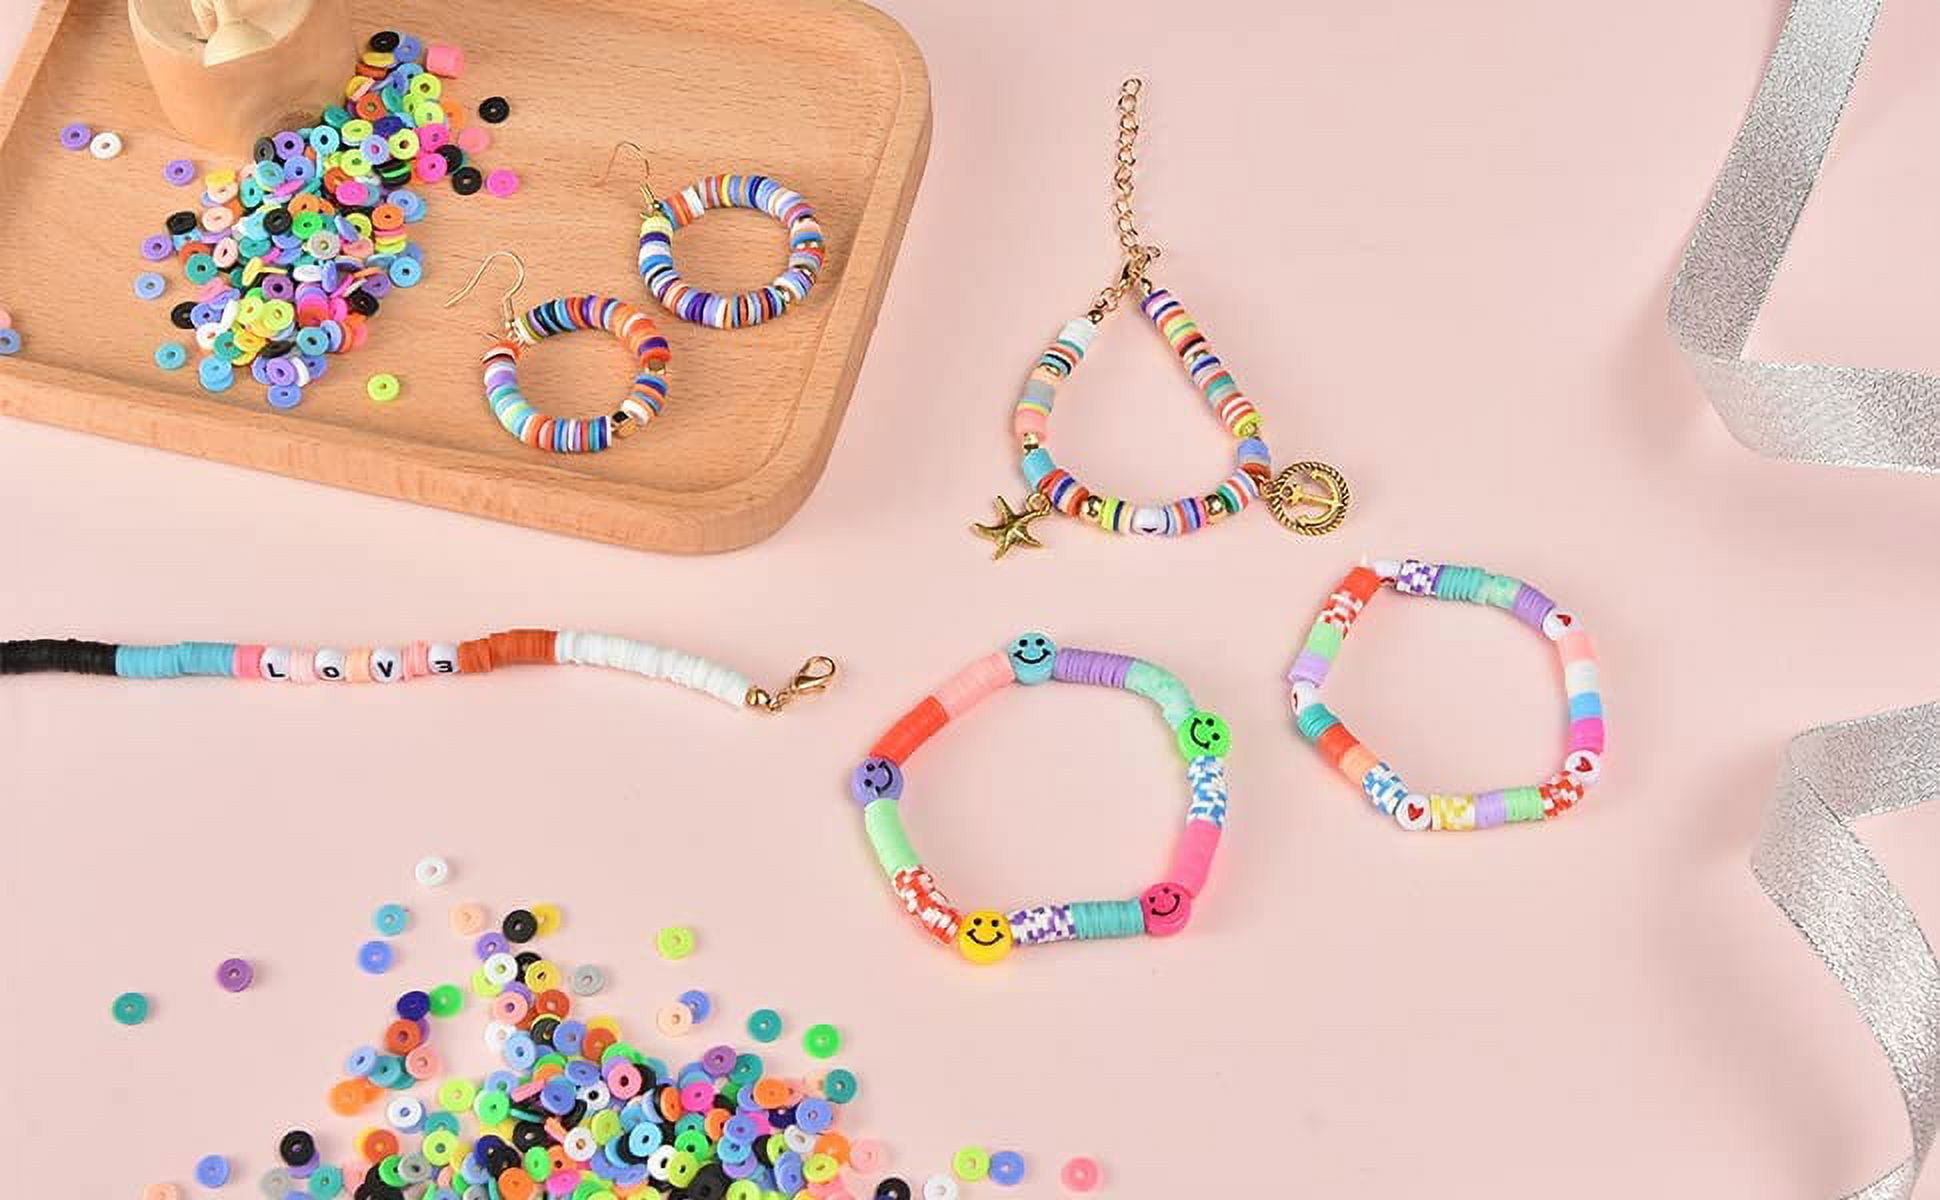 6000 Pcs Polymer Clay Beads Bracelets Making Kit 291 Pcs DIY Charms Pendan  - Beading & Jewelry Making Kits, Facebook Marketplace